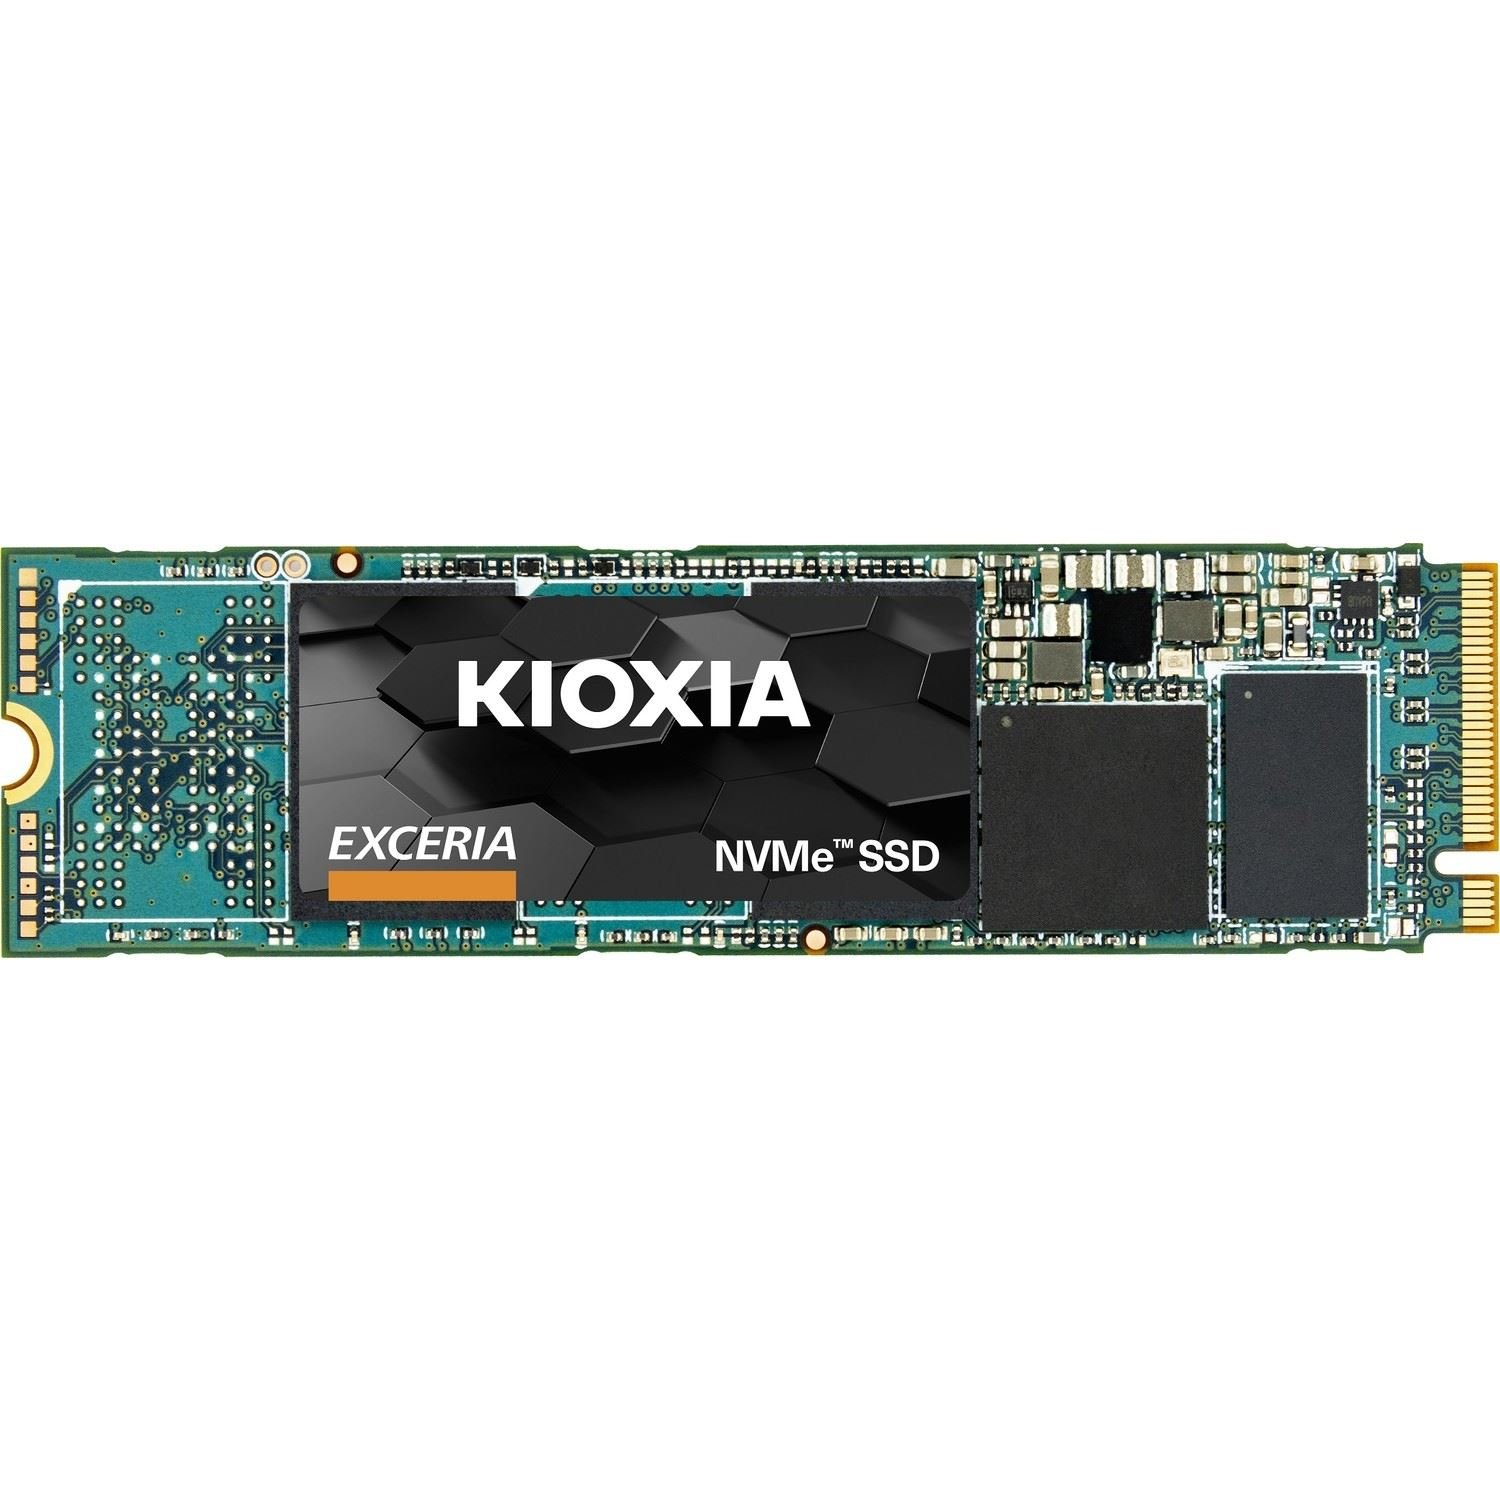 KIOXIA LRC10Z250GG8 250GB Exceria PCIe M.2 NVMe 1700-1200MB/s Flash SSD